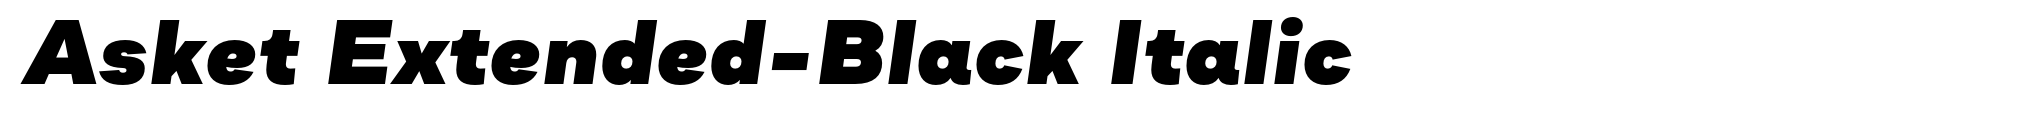 Asket Extended-Black Italic image